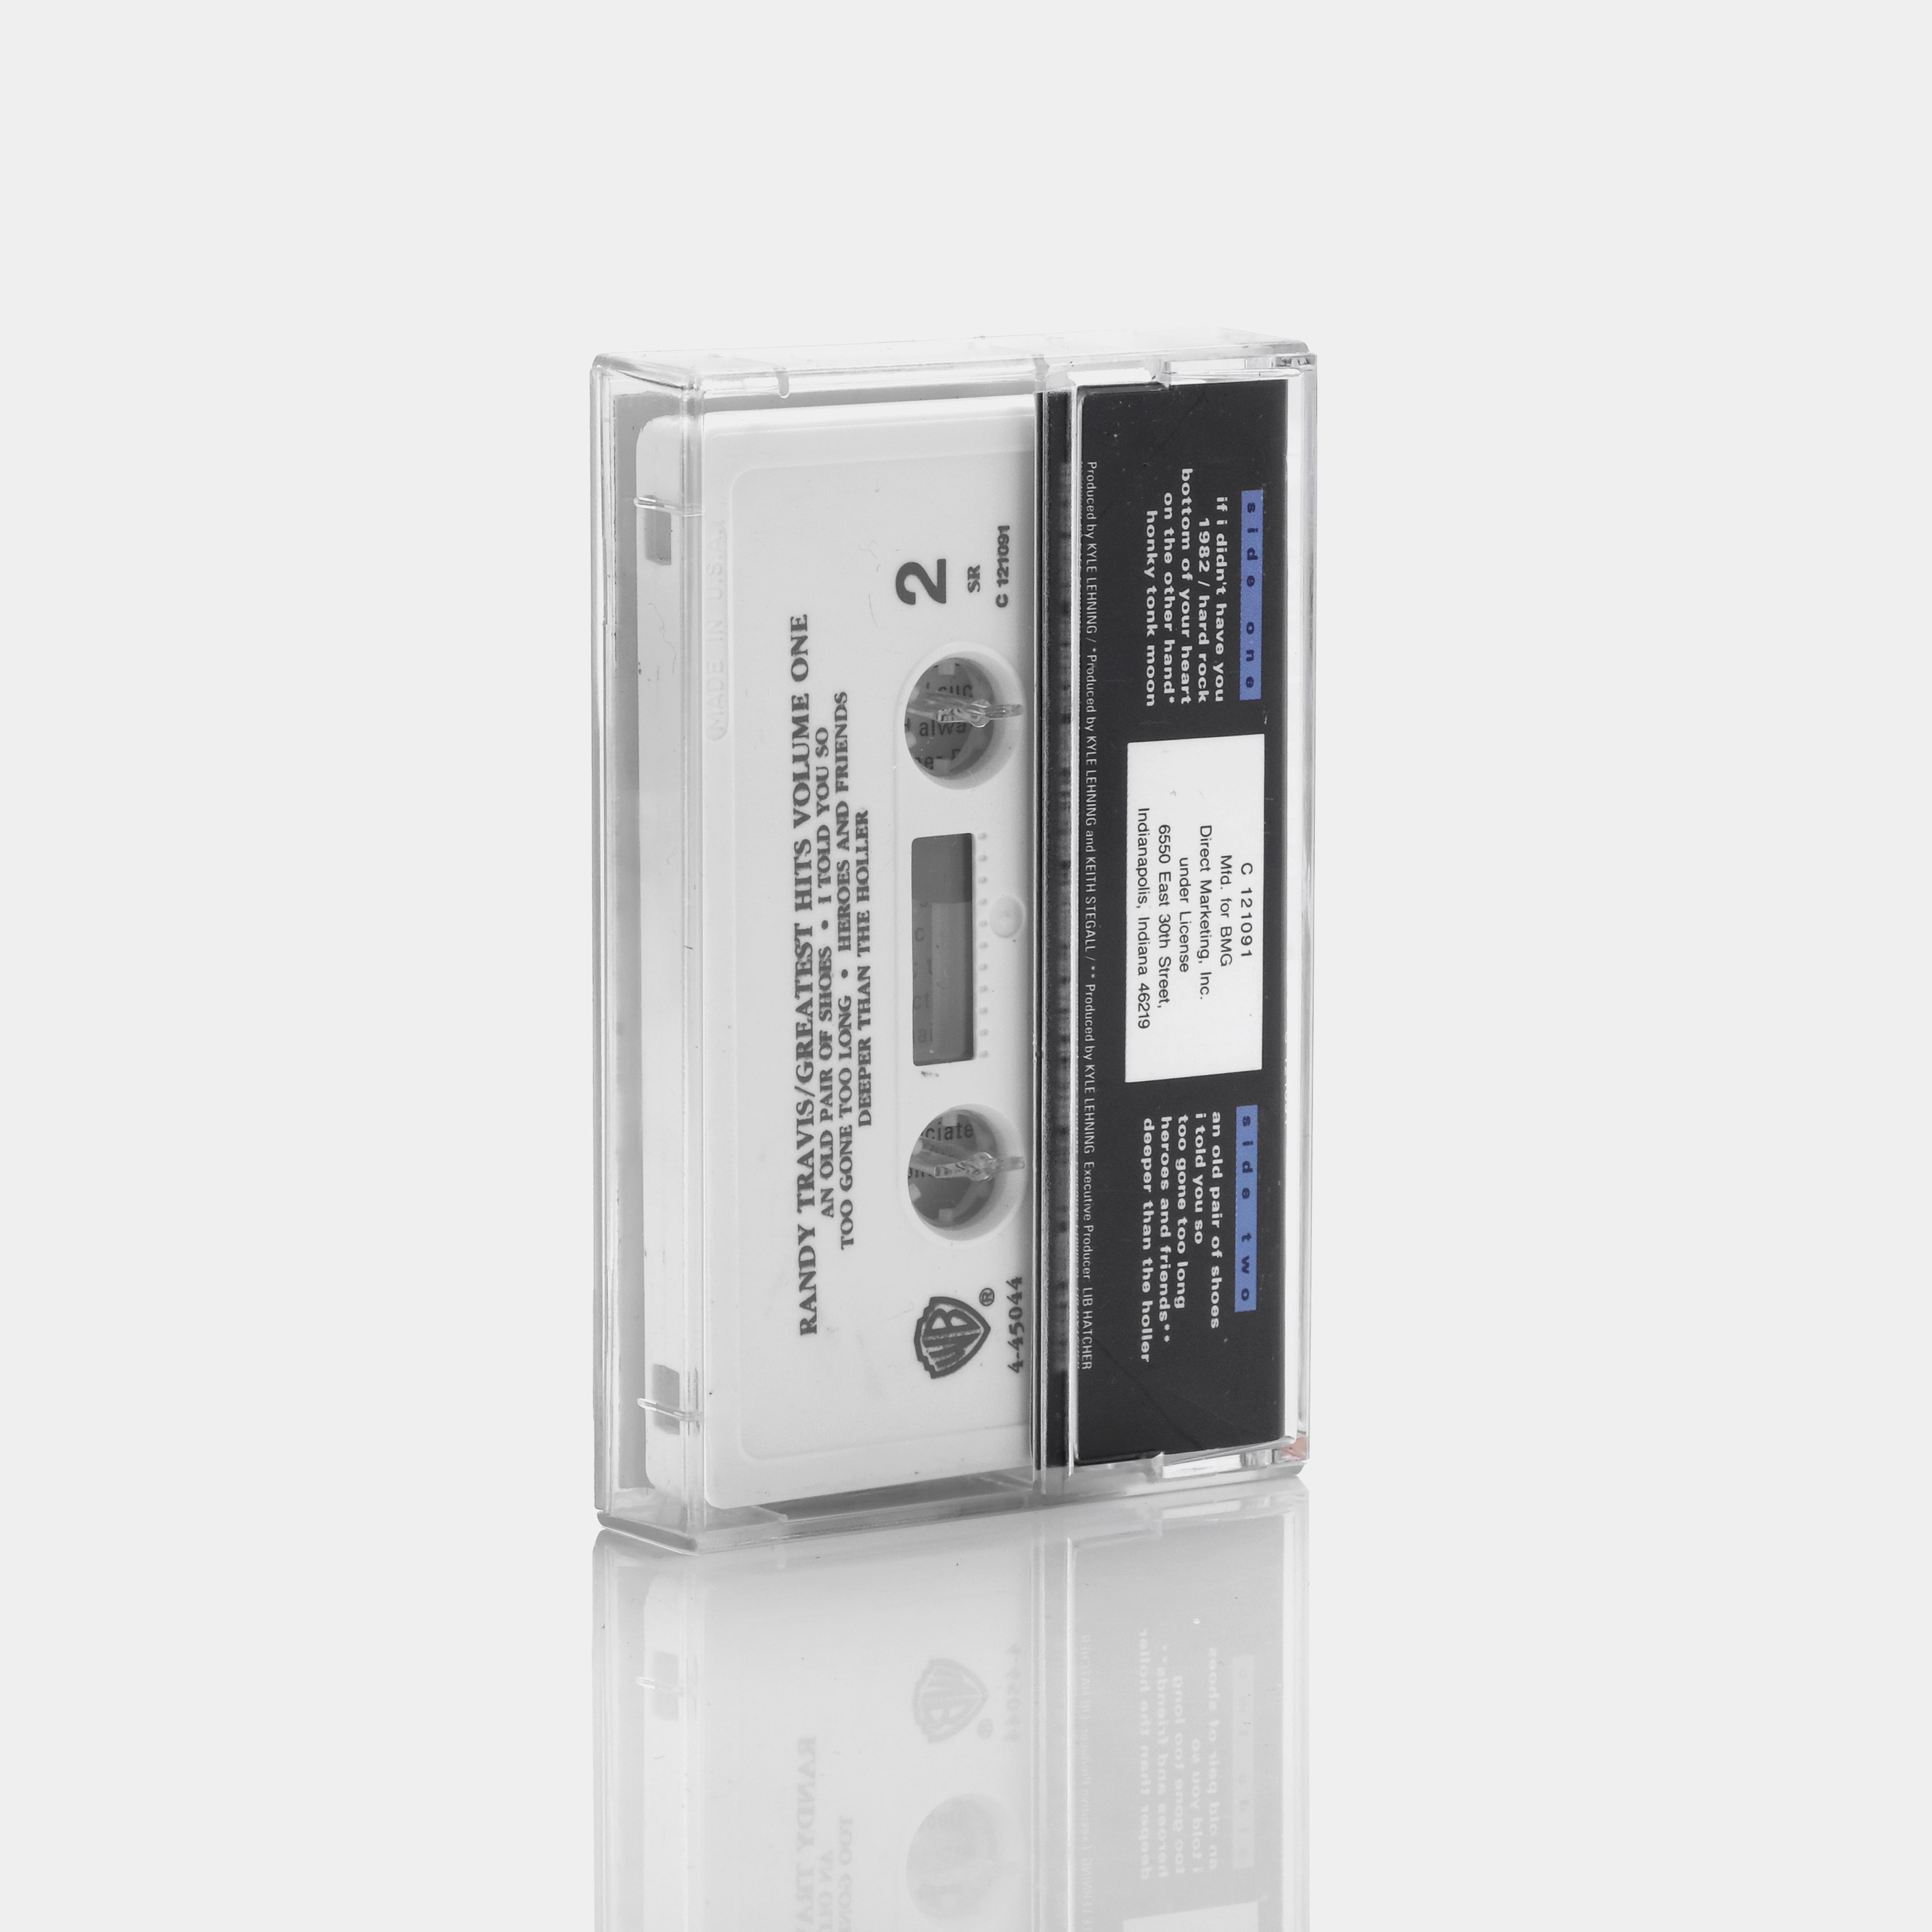 Randy Travis - Greatest Hits Volume One Cassette Tape